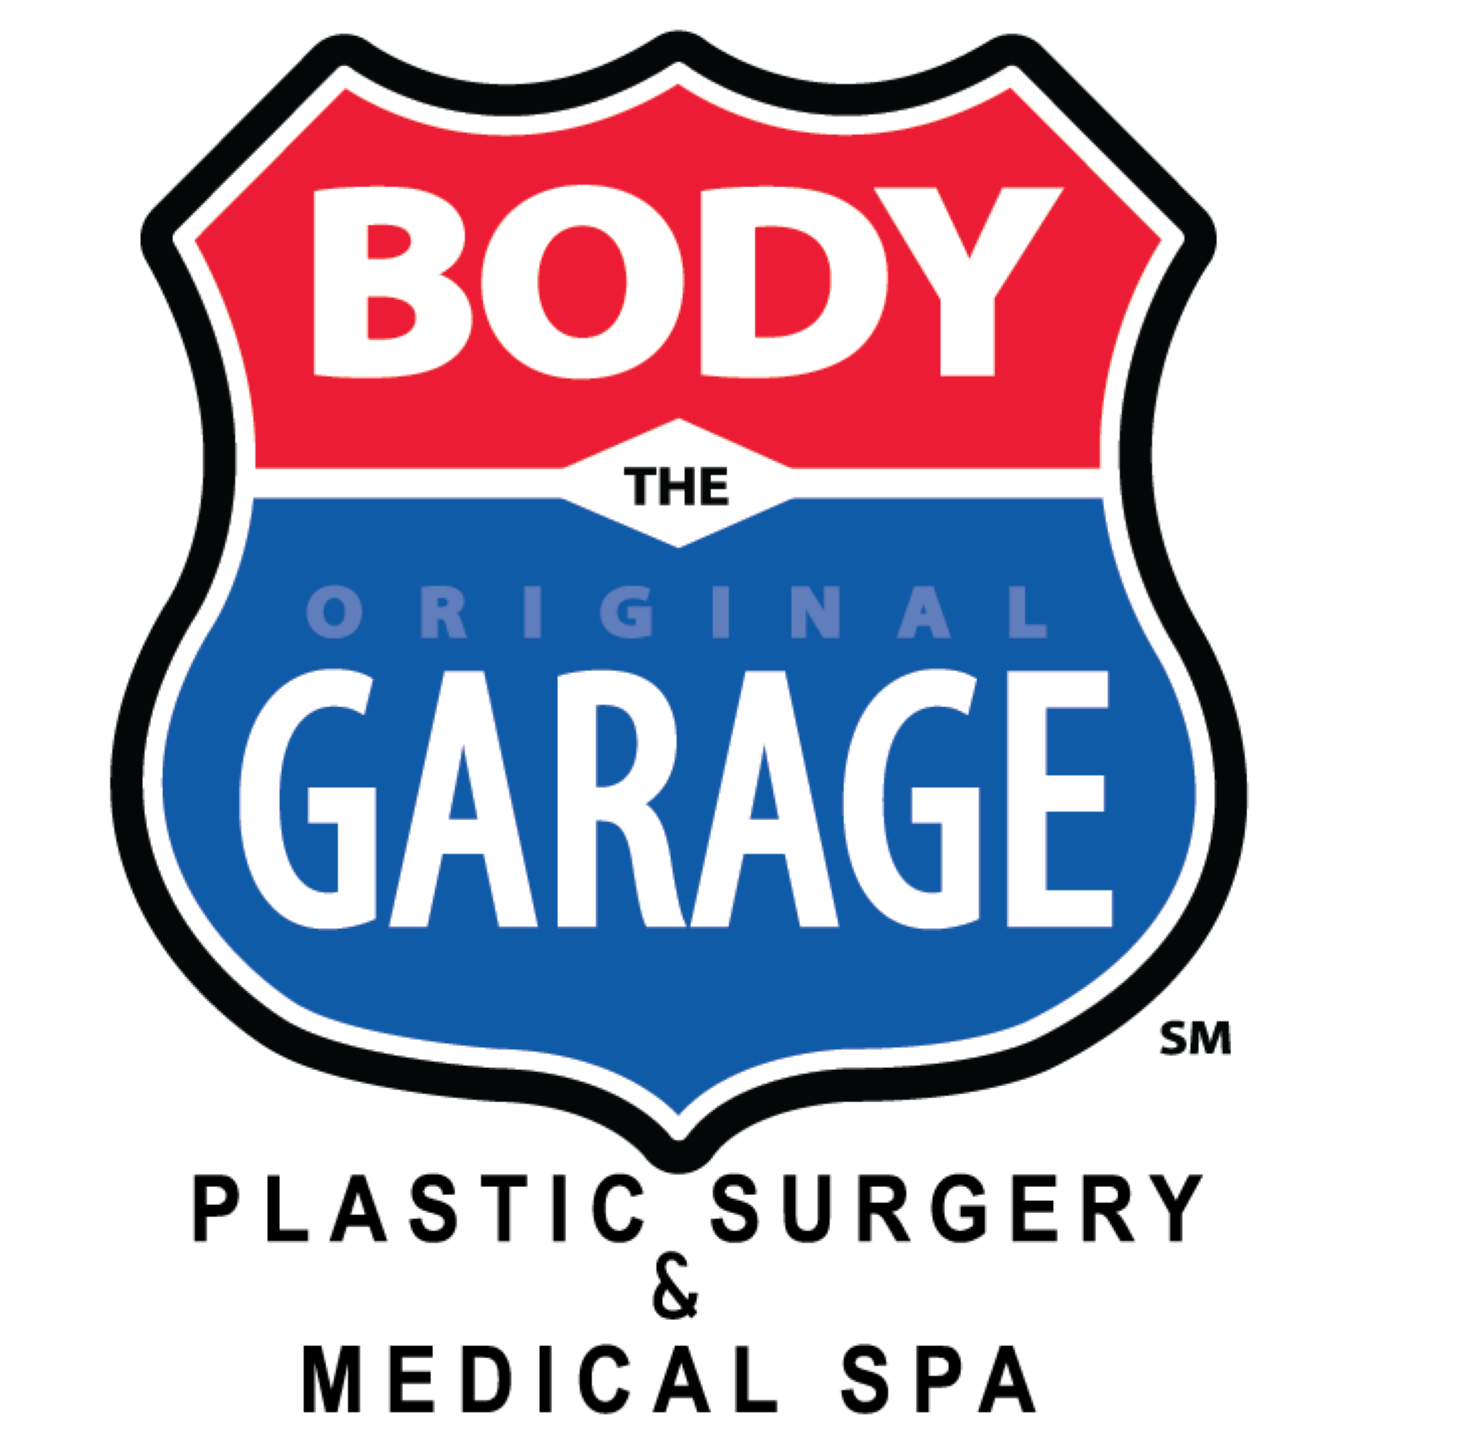 The Body Garage